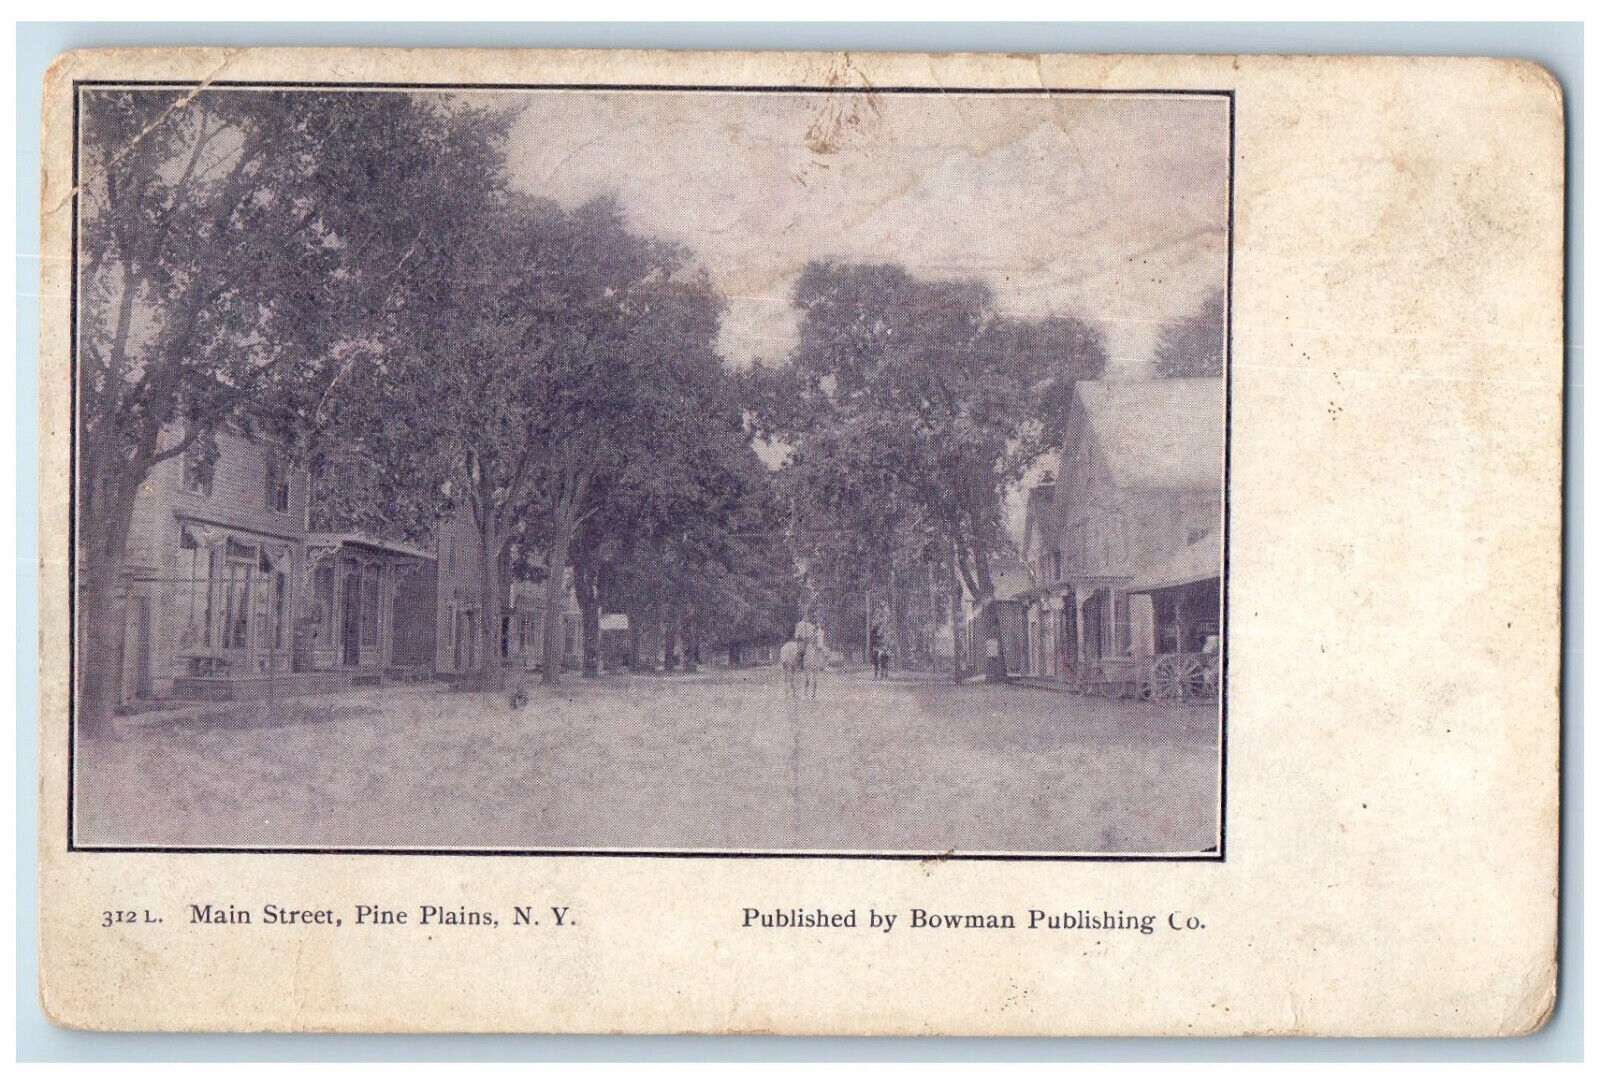 1908 Main Street Pine Plains New York NY Bowman Publishing Co. Postcard